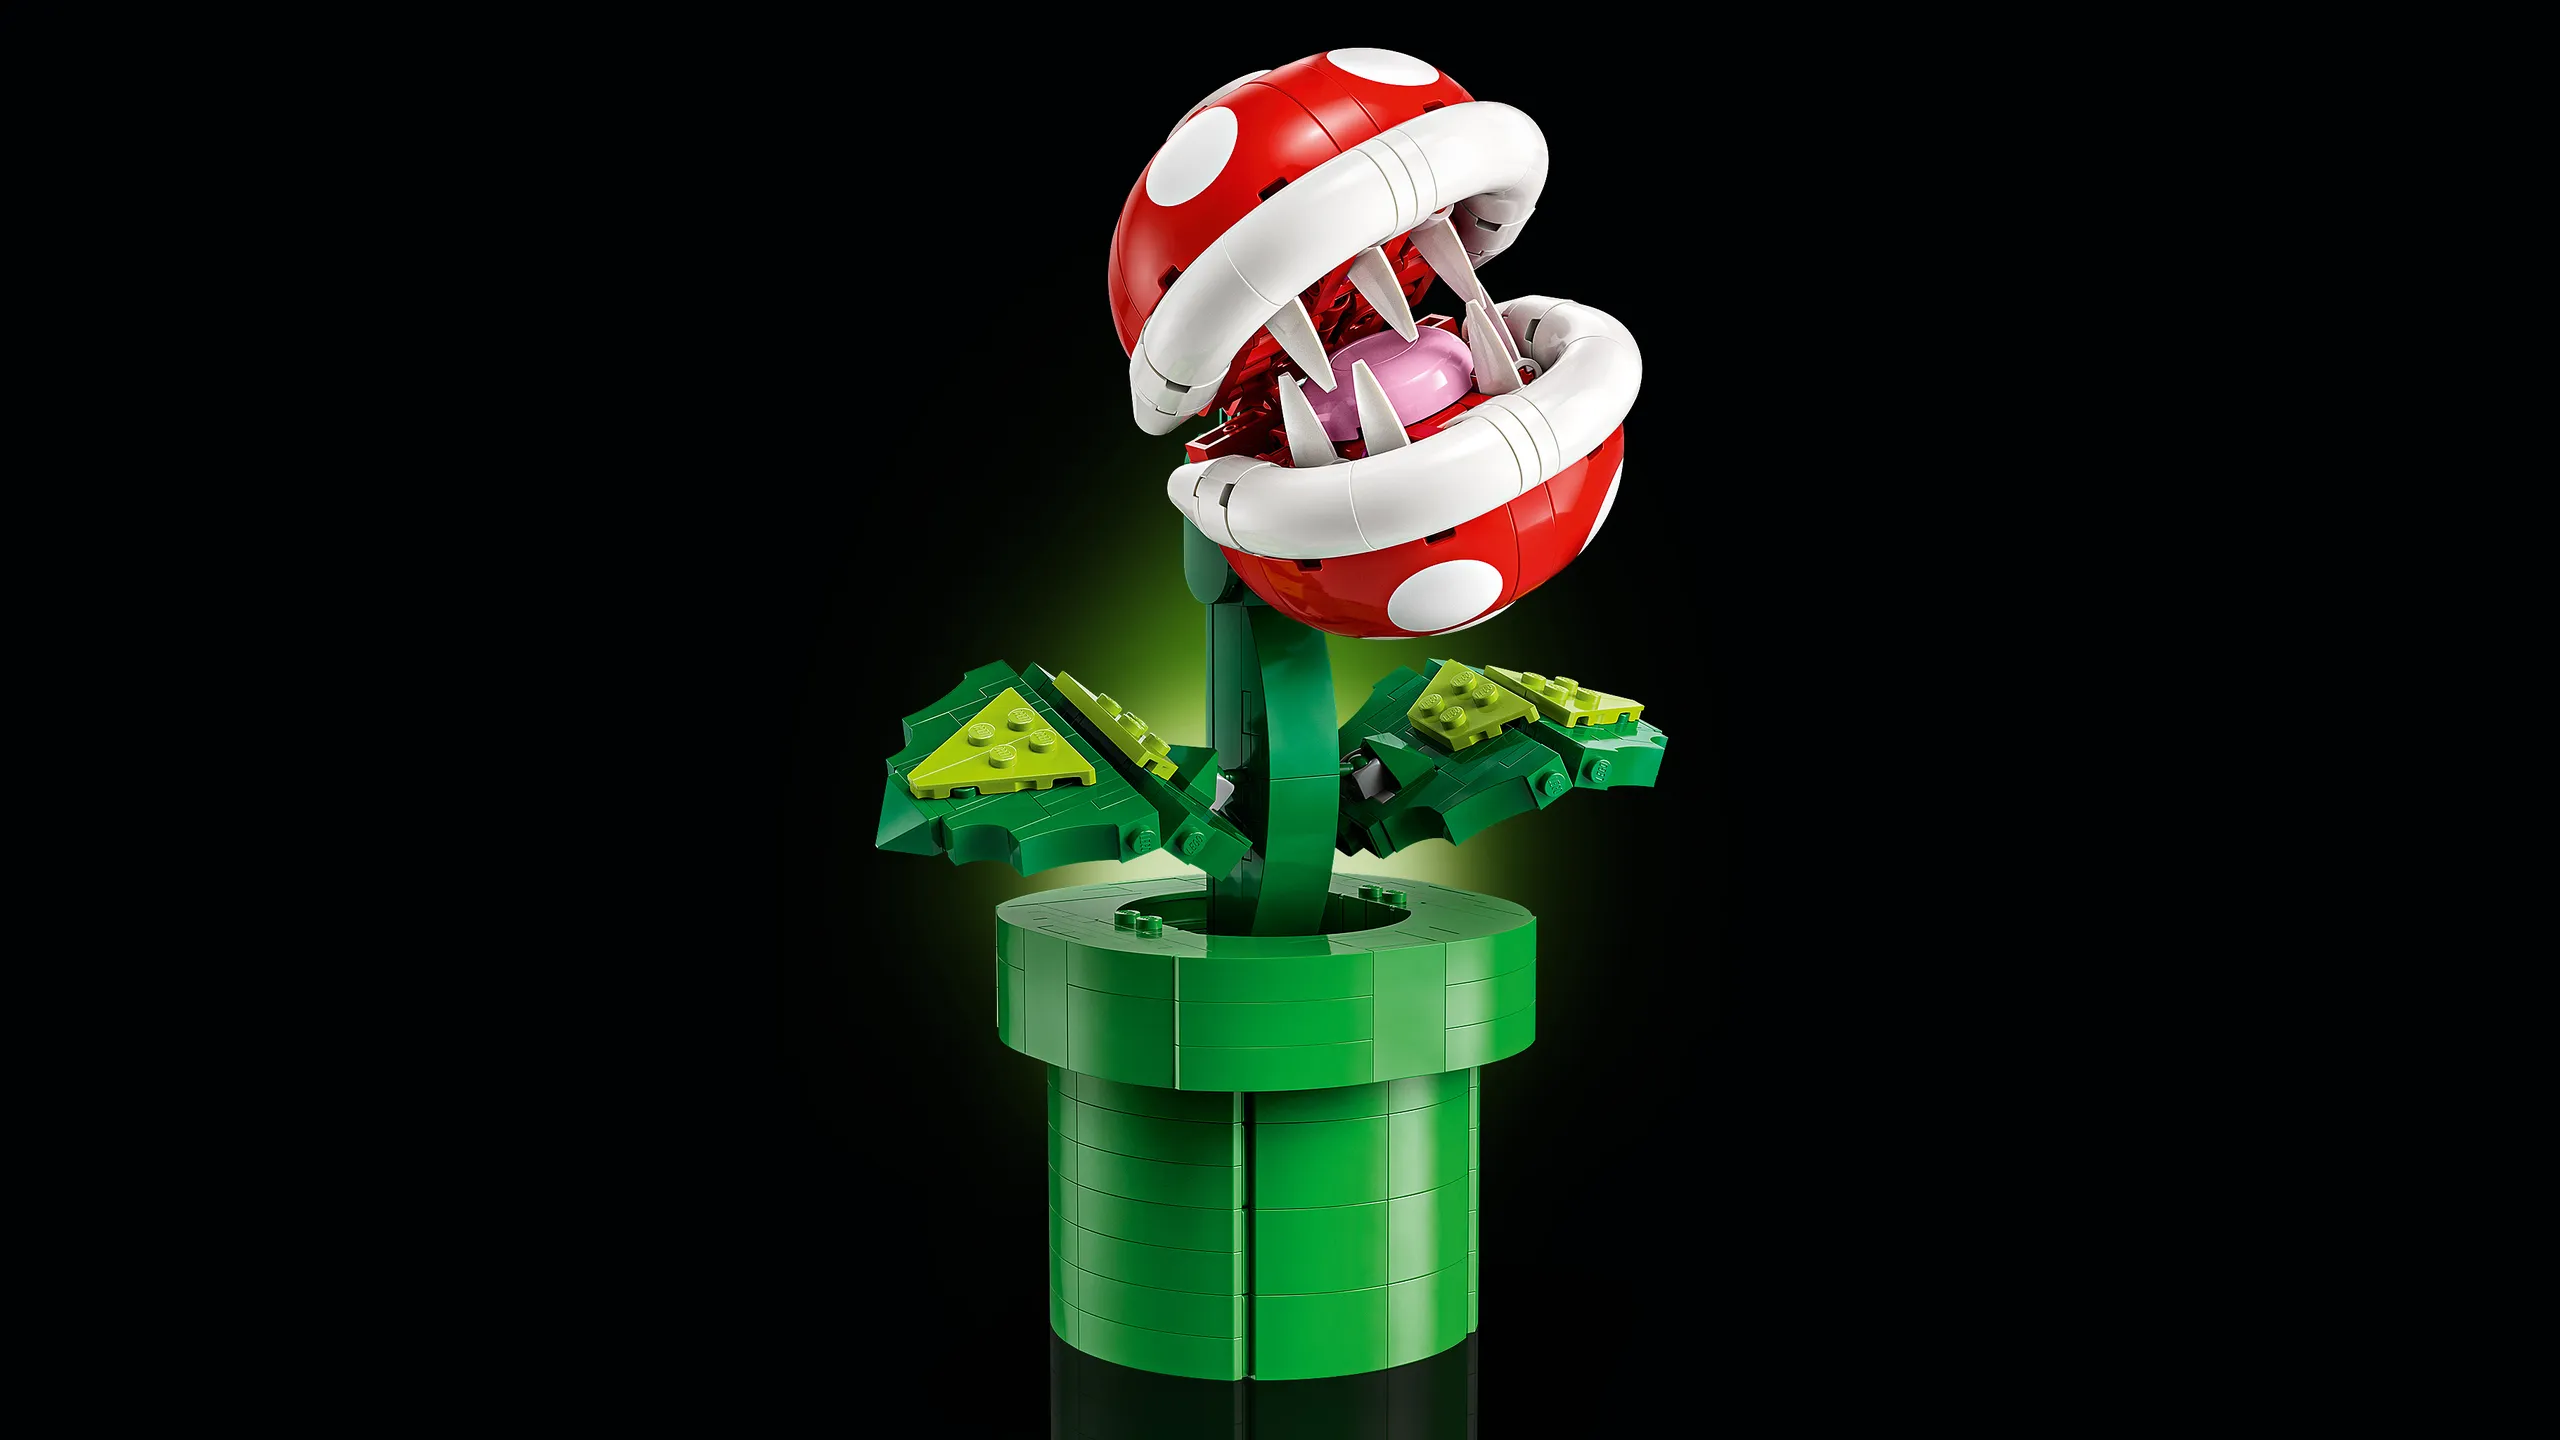 Pianta Piranha - Lego Super Mario 71426